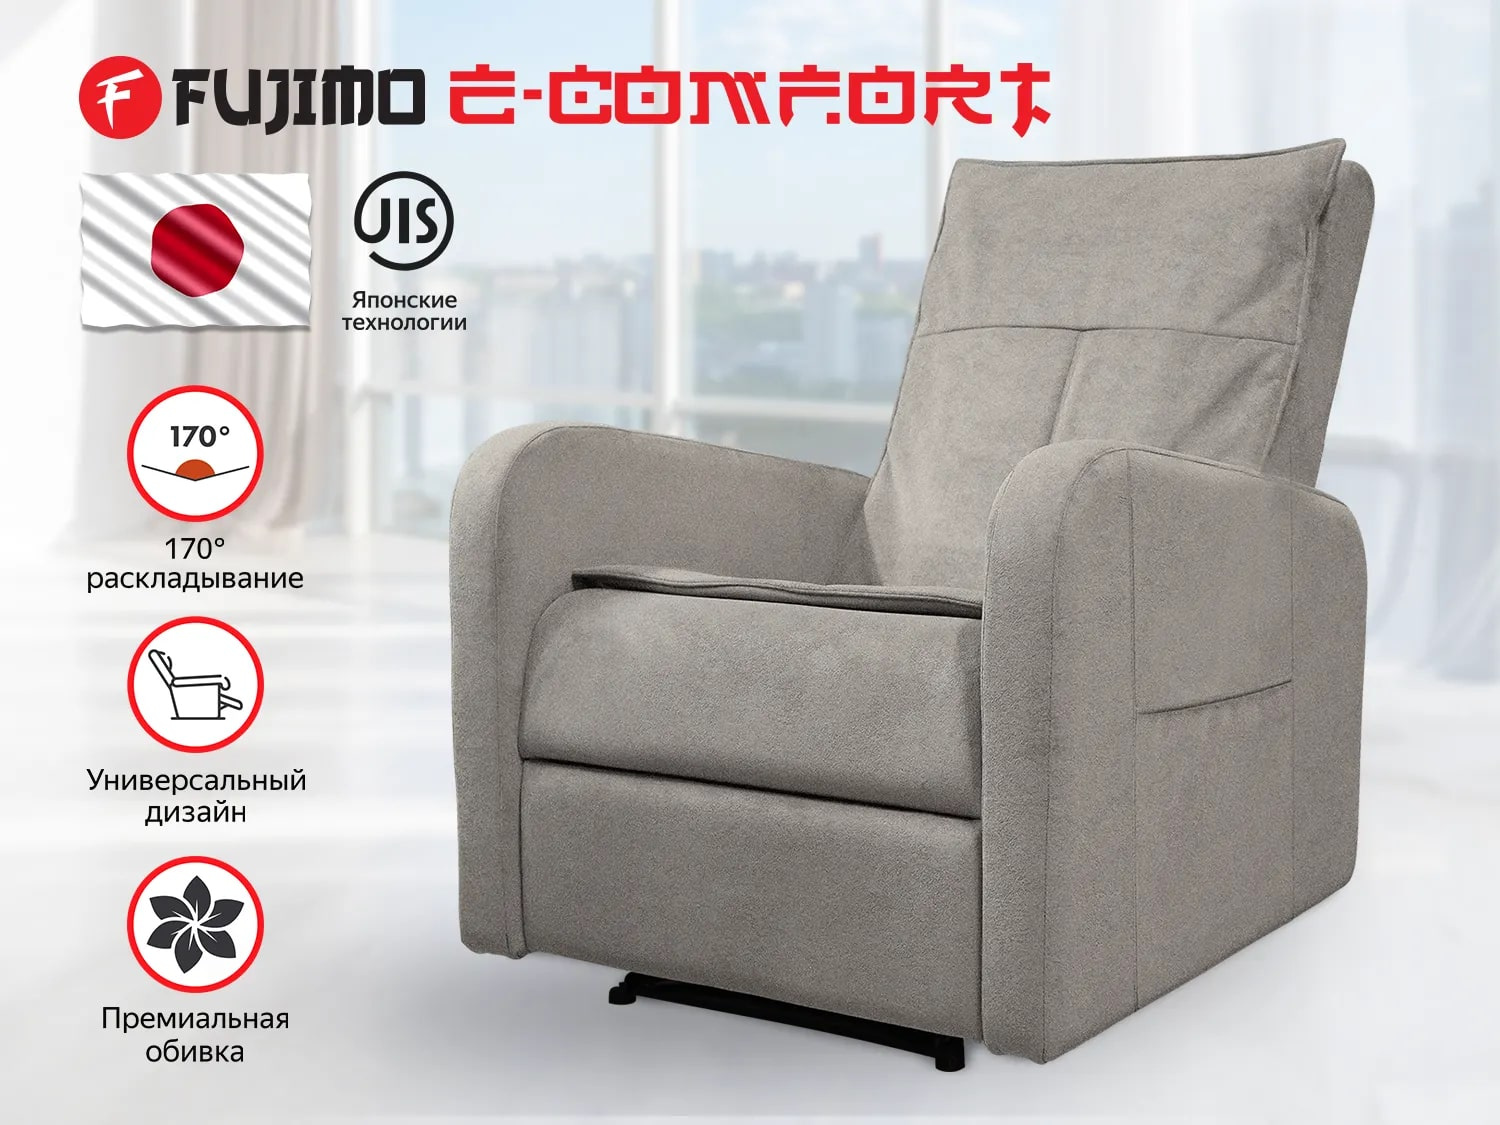 E-COMFORT CHAIR F3005 FEW с электроприводом Грейси в СПб по цене 63000 ₽ в категории массажные кресла Fujimo